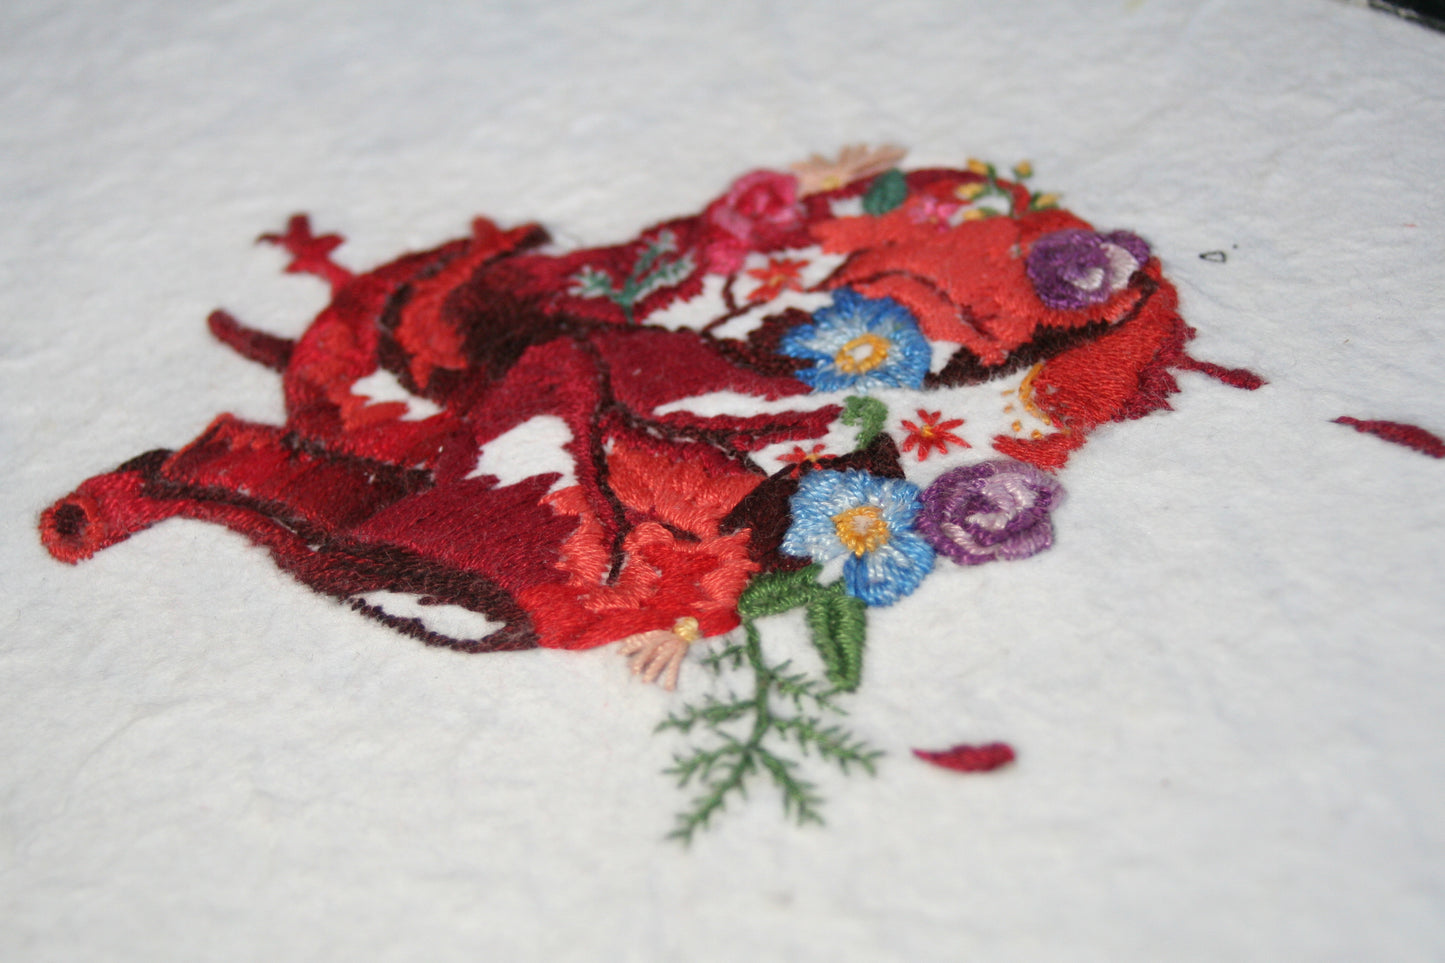 Embroidery Heart 17,5 metri d'amore - Drunkenrabbit